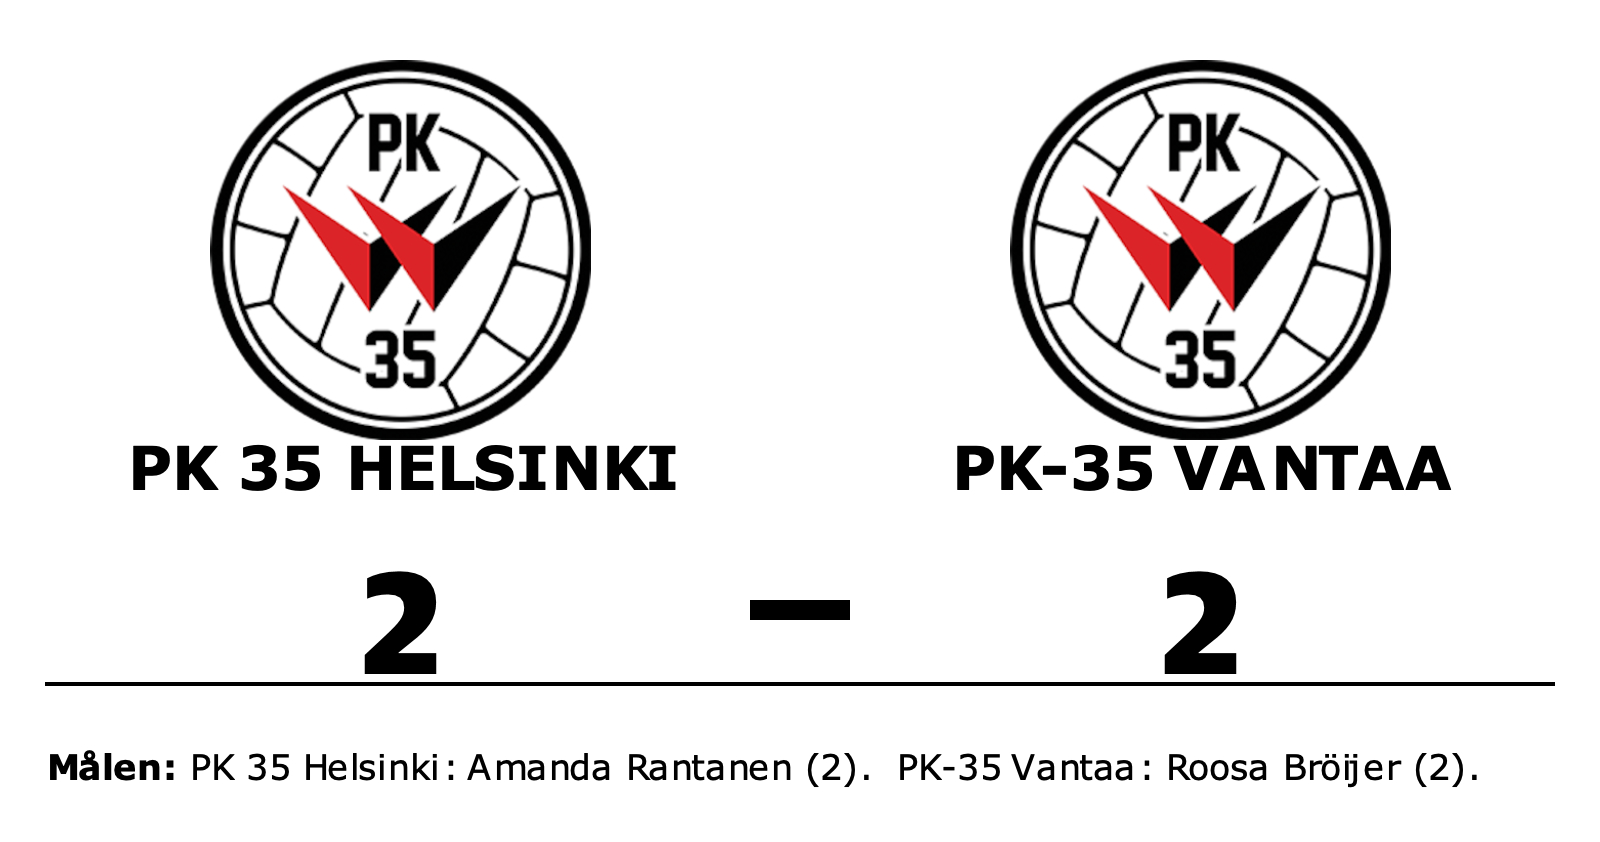 PK 35 Helsinki spelade lika mot PK-35 Vantaa